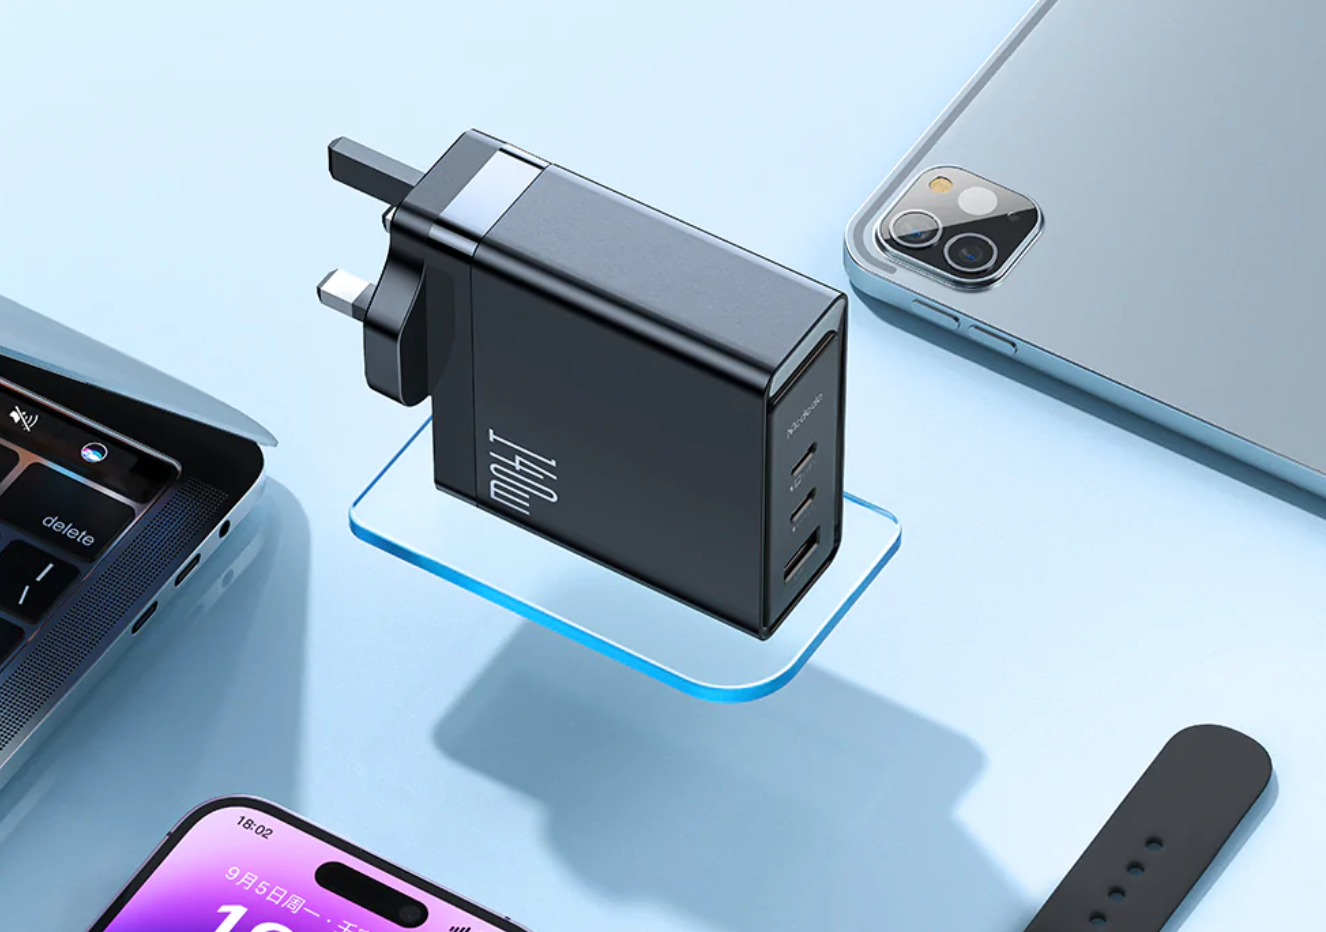 Mcdodo 140W GaN 5 Pro Dual Type-C + USB  Fast Charger  (UK plug)